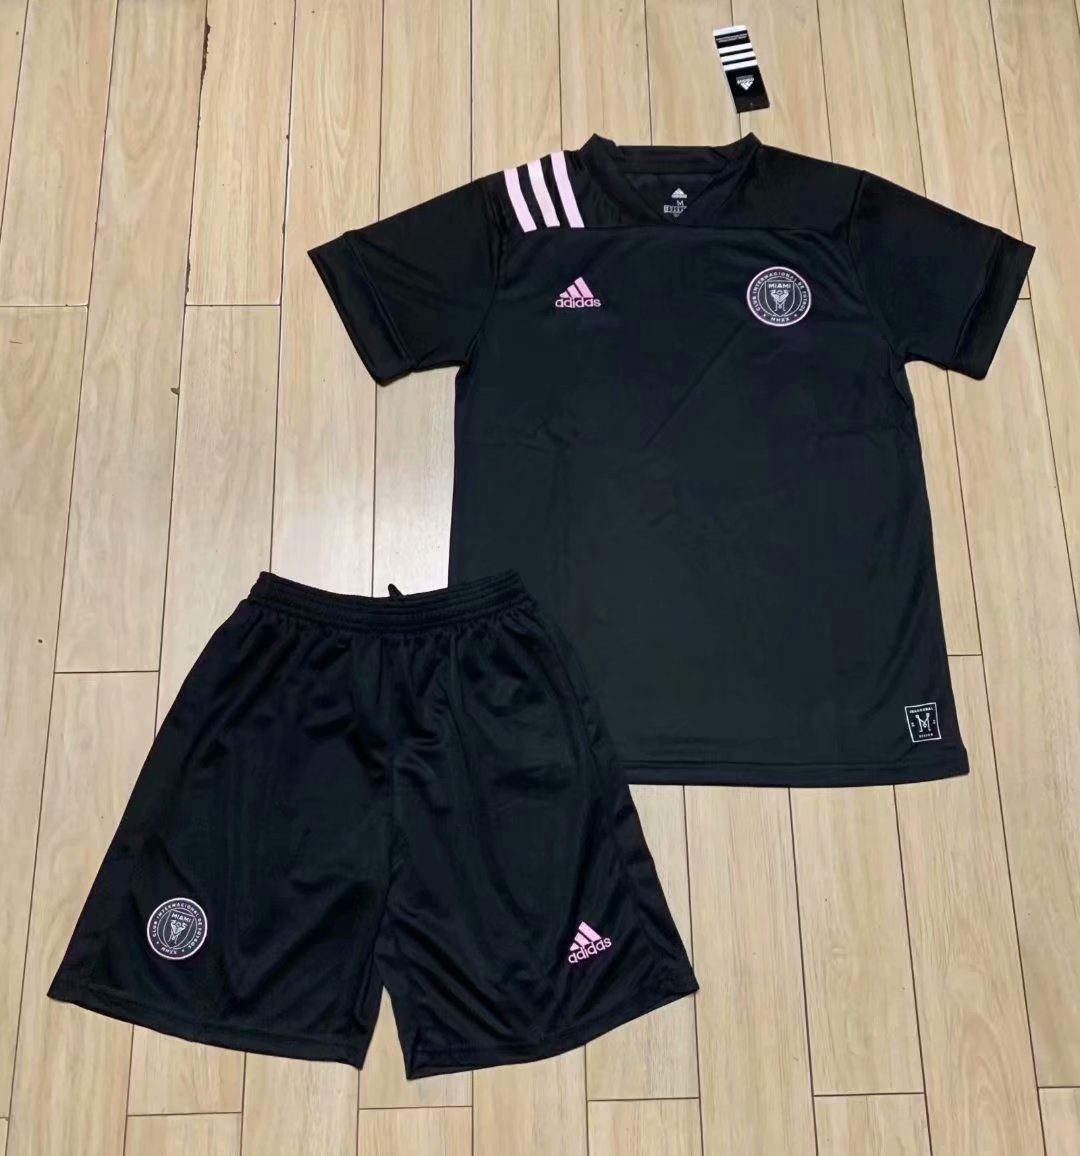 20/21 New Children Miami black soccer uniforms football suits